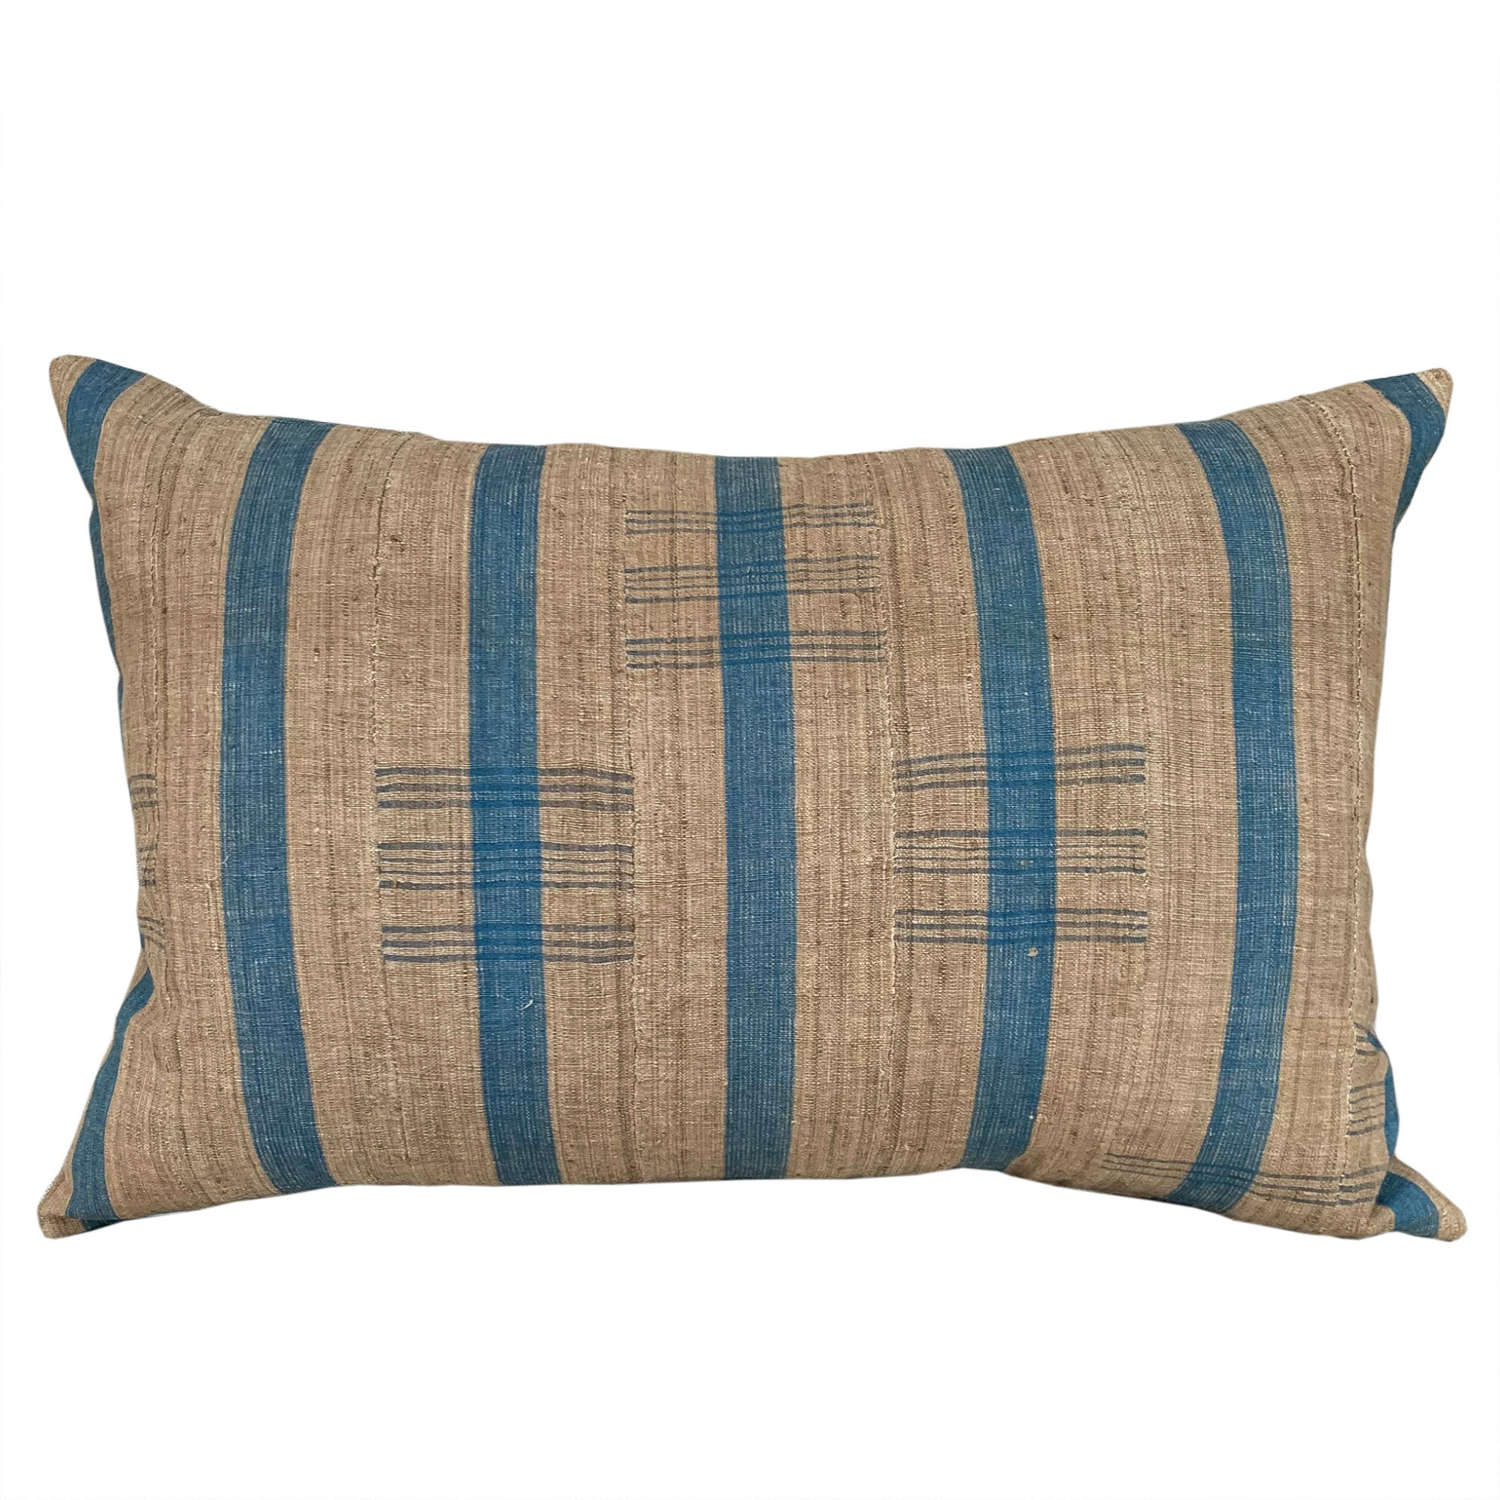 Yoruba cushions with blue stripe